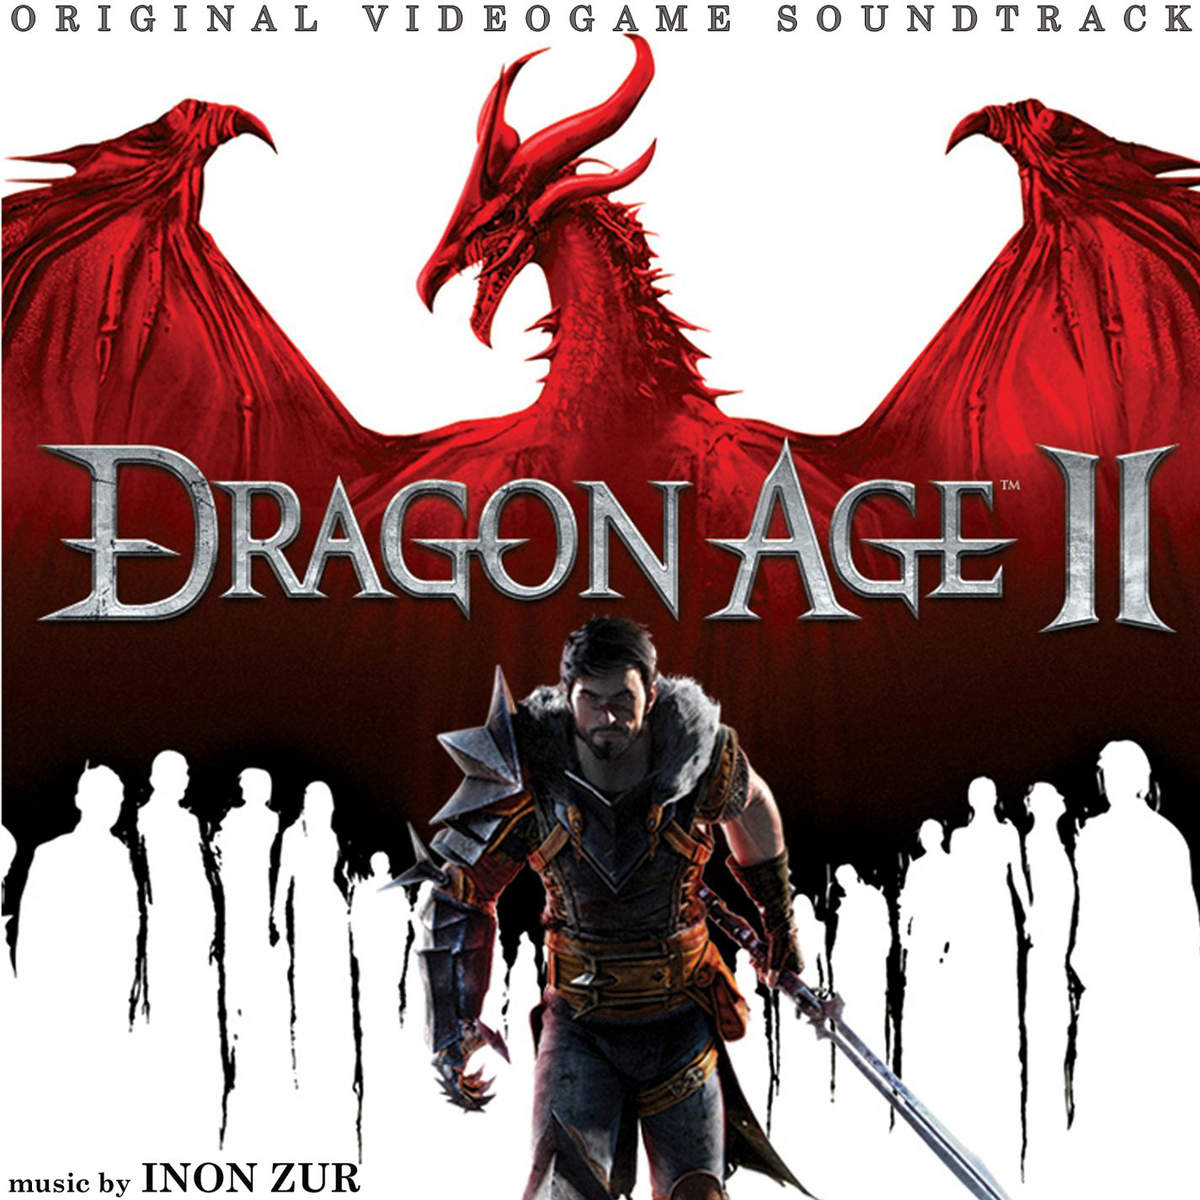 Dragon_Age_2_Original_Videogame_Soundtrack__cover1200x1200.jpg